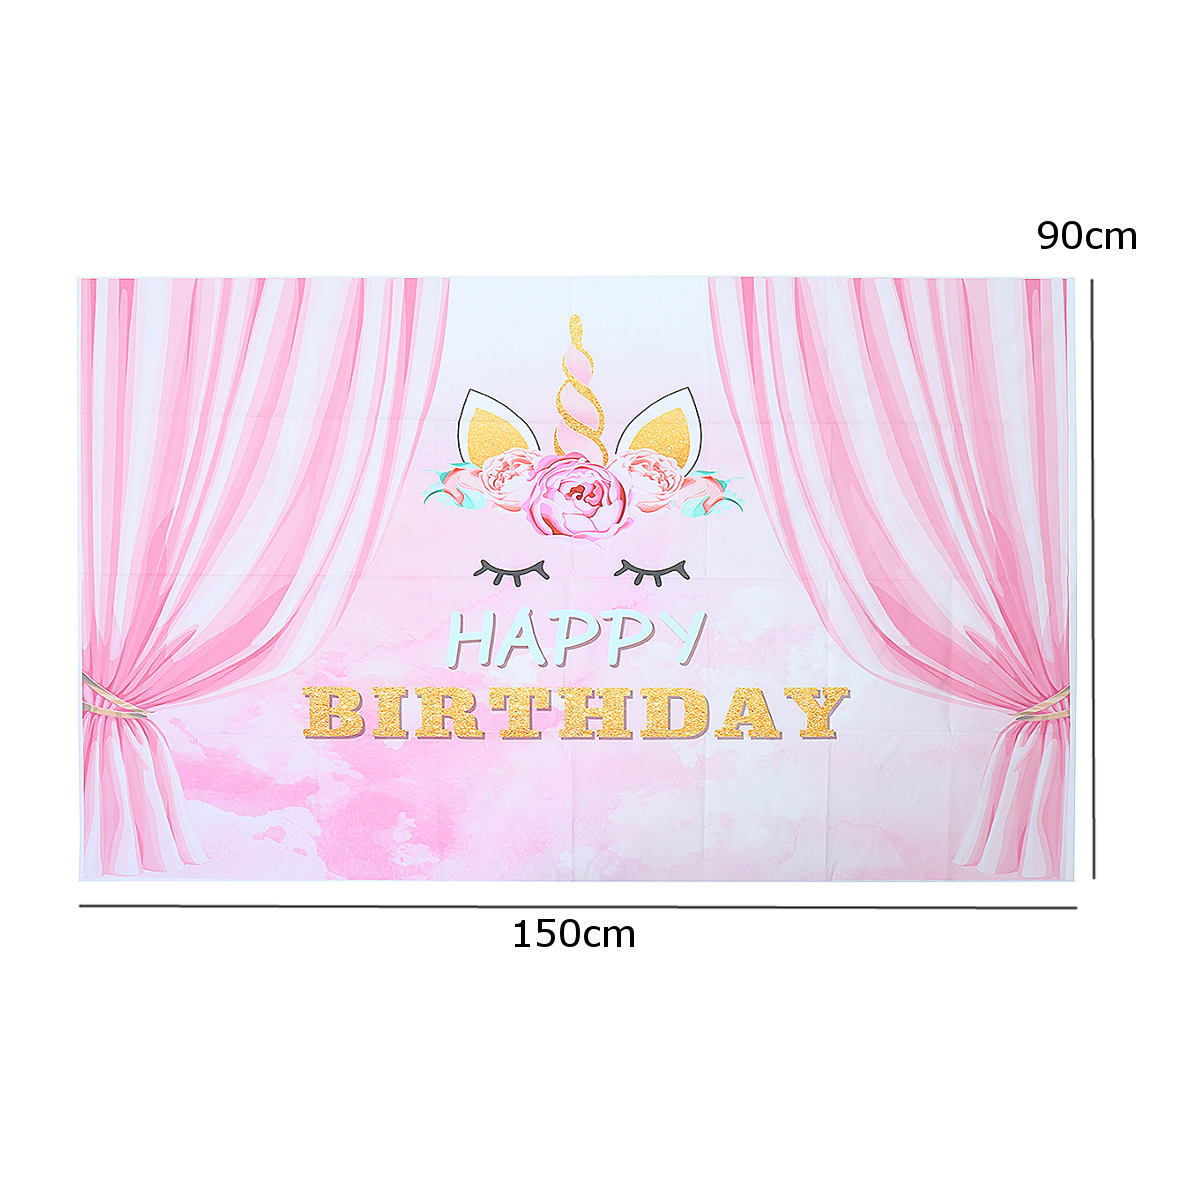 5x3FT-Pink-Curtain-Unicorn-Birthday-Theme-Photography-Backdrop-Studio-Prop-Background-1402326-3